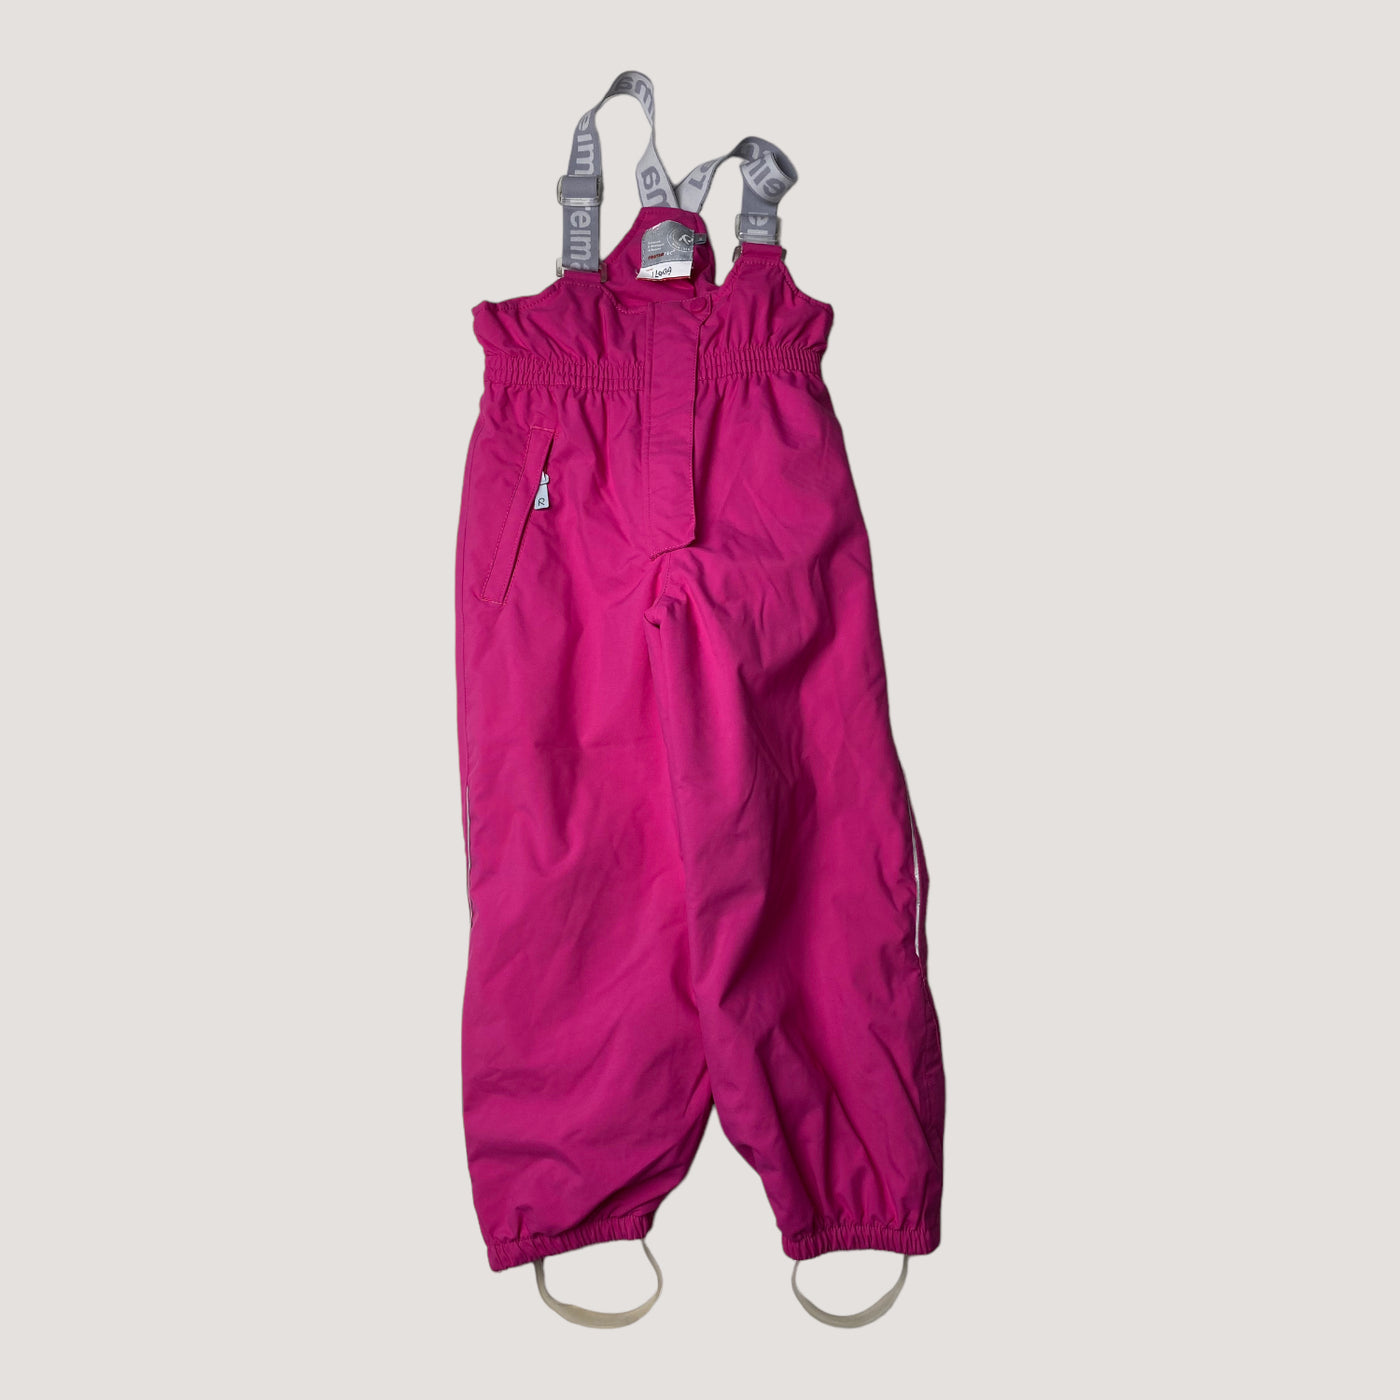 Reima winter pants, deep pink | 110cm